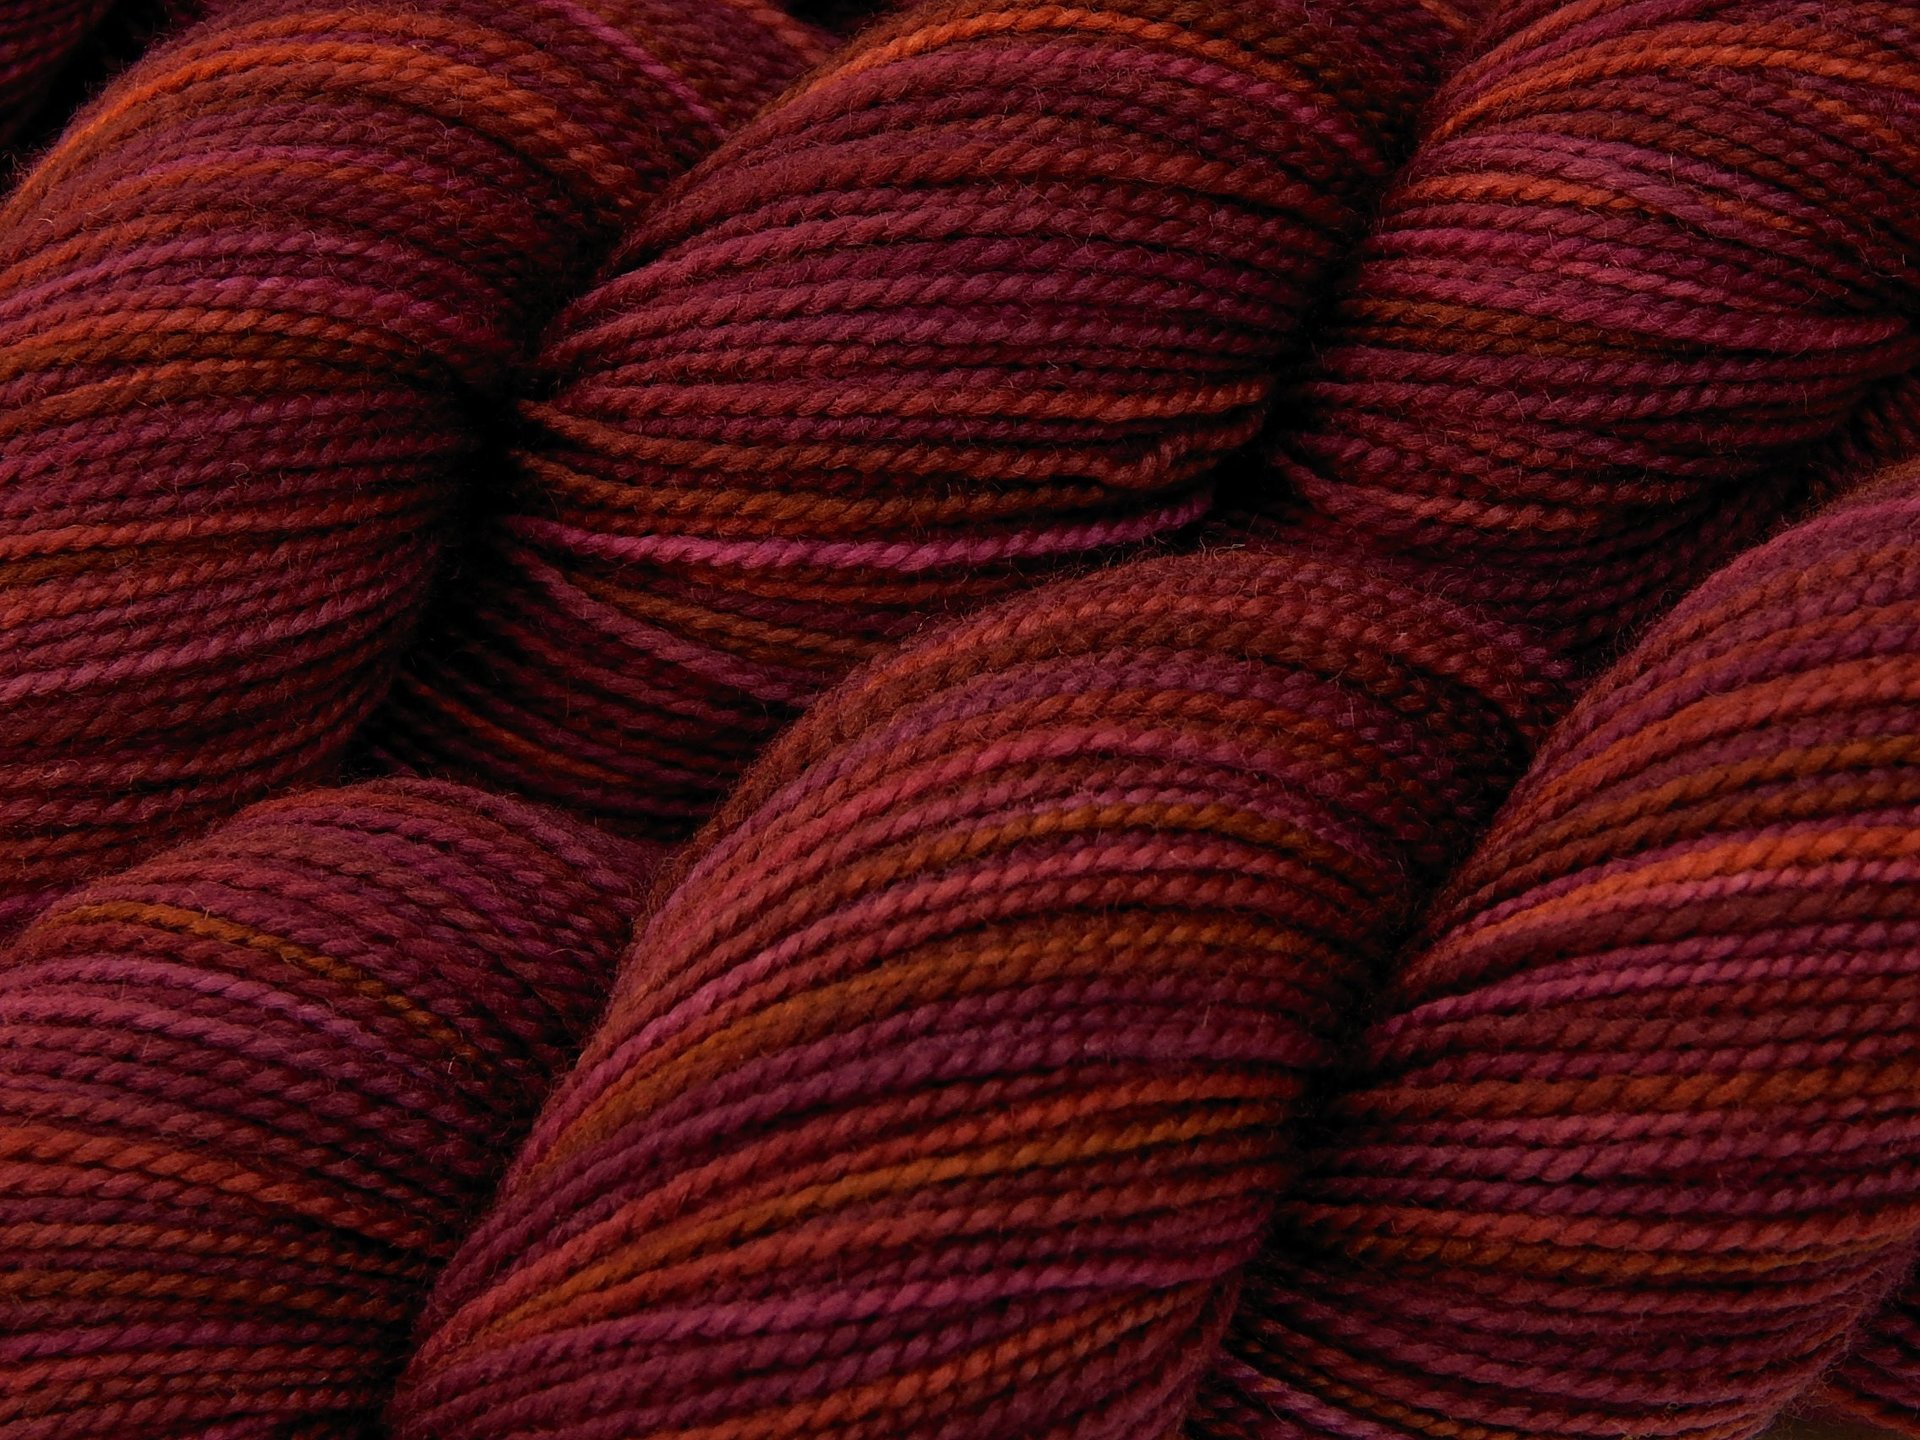 Hand Dyed Sock Yarn, Fingering Weight 100% Superwash Merino Wool - Merlot Multi - Indie Dyed Knitting Yarn, Burgundy Deep Red Hand Dyed Yarn